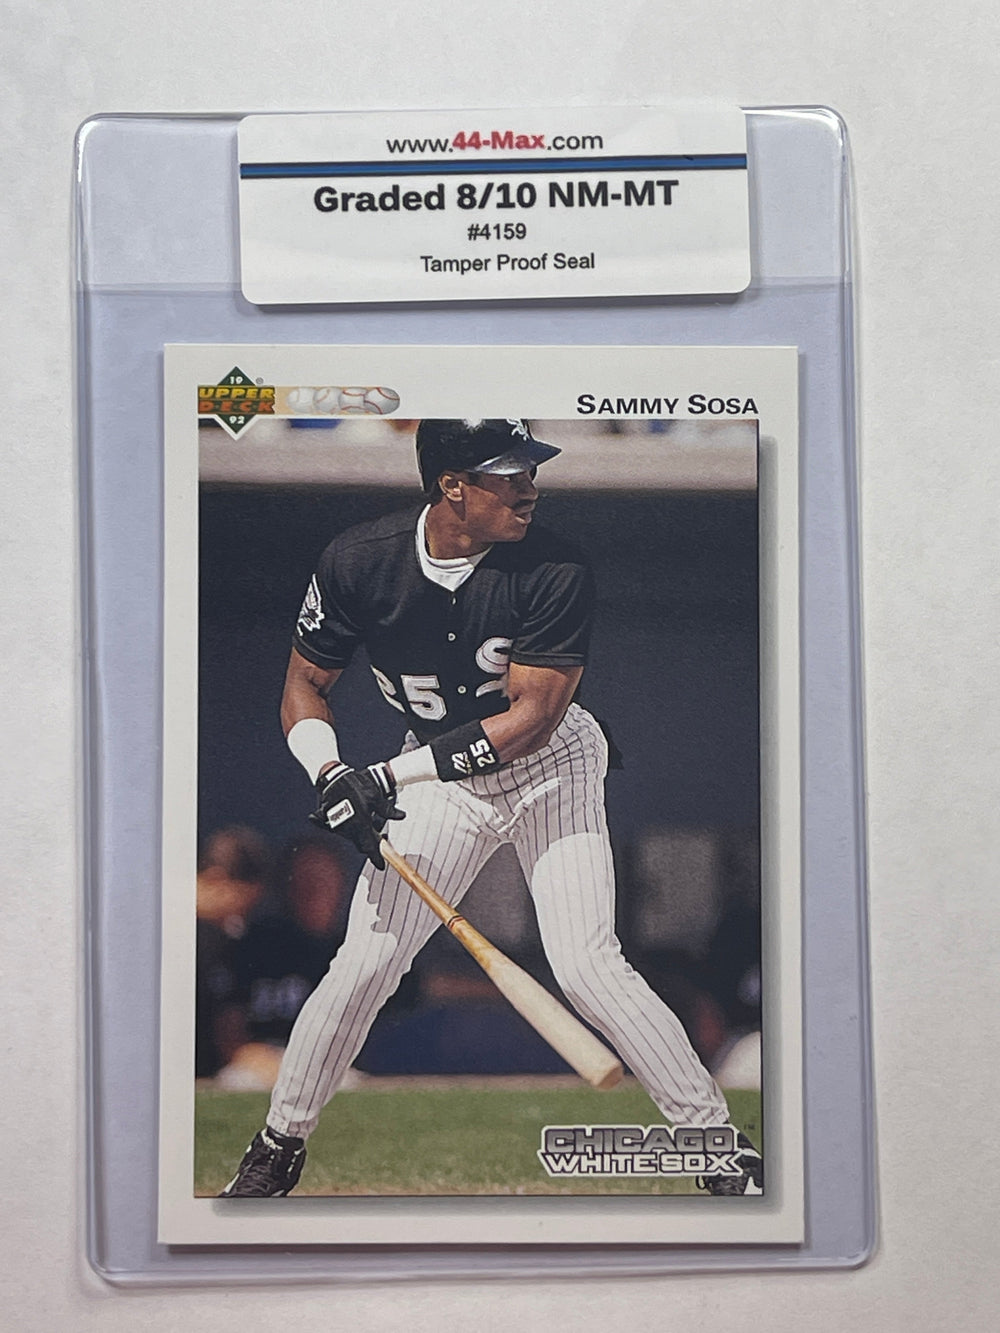 Sammy Sosa 1992 Upper Deck Baseball Card. 44-Max 8/10 NM-MT #4159